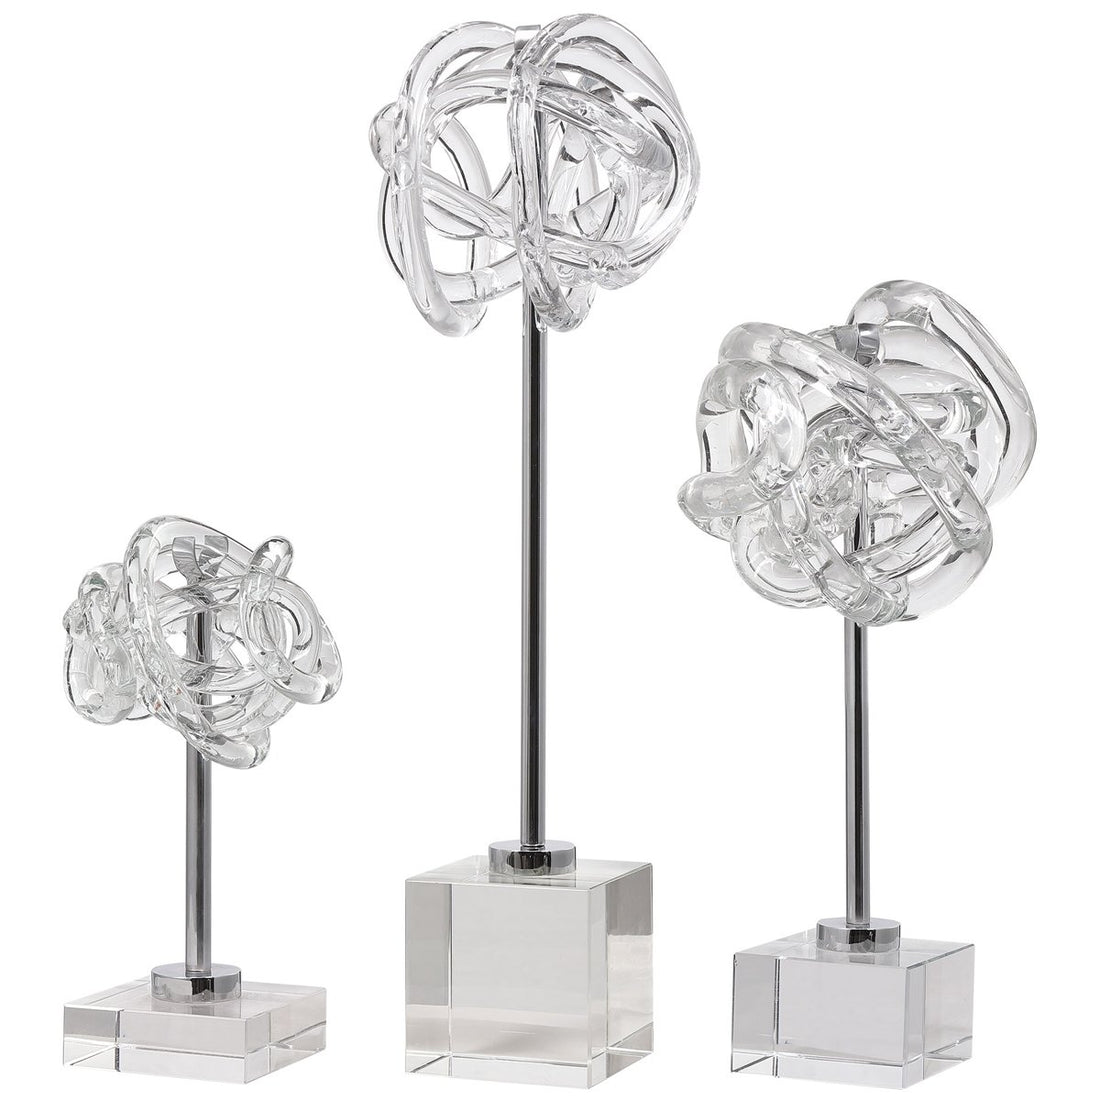 Uttermost Neuron Glass Table Top Sculptures, 3-Piece Set